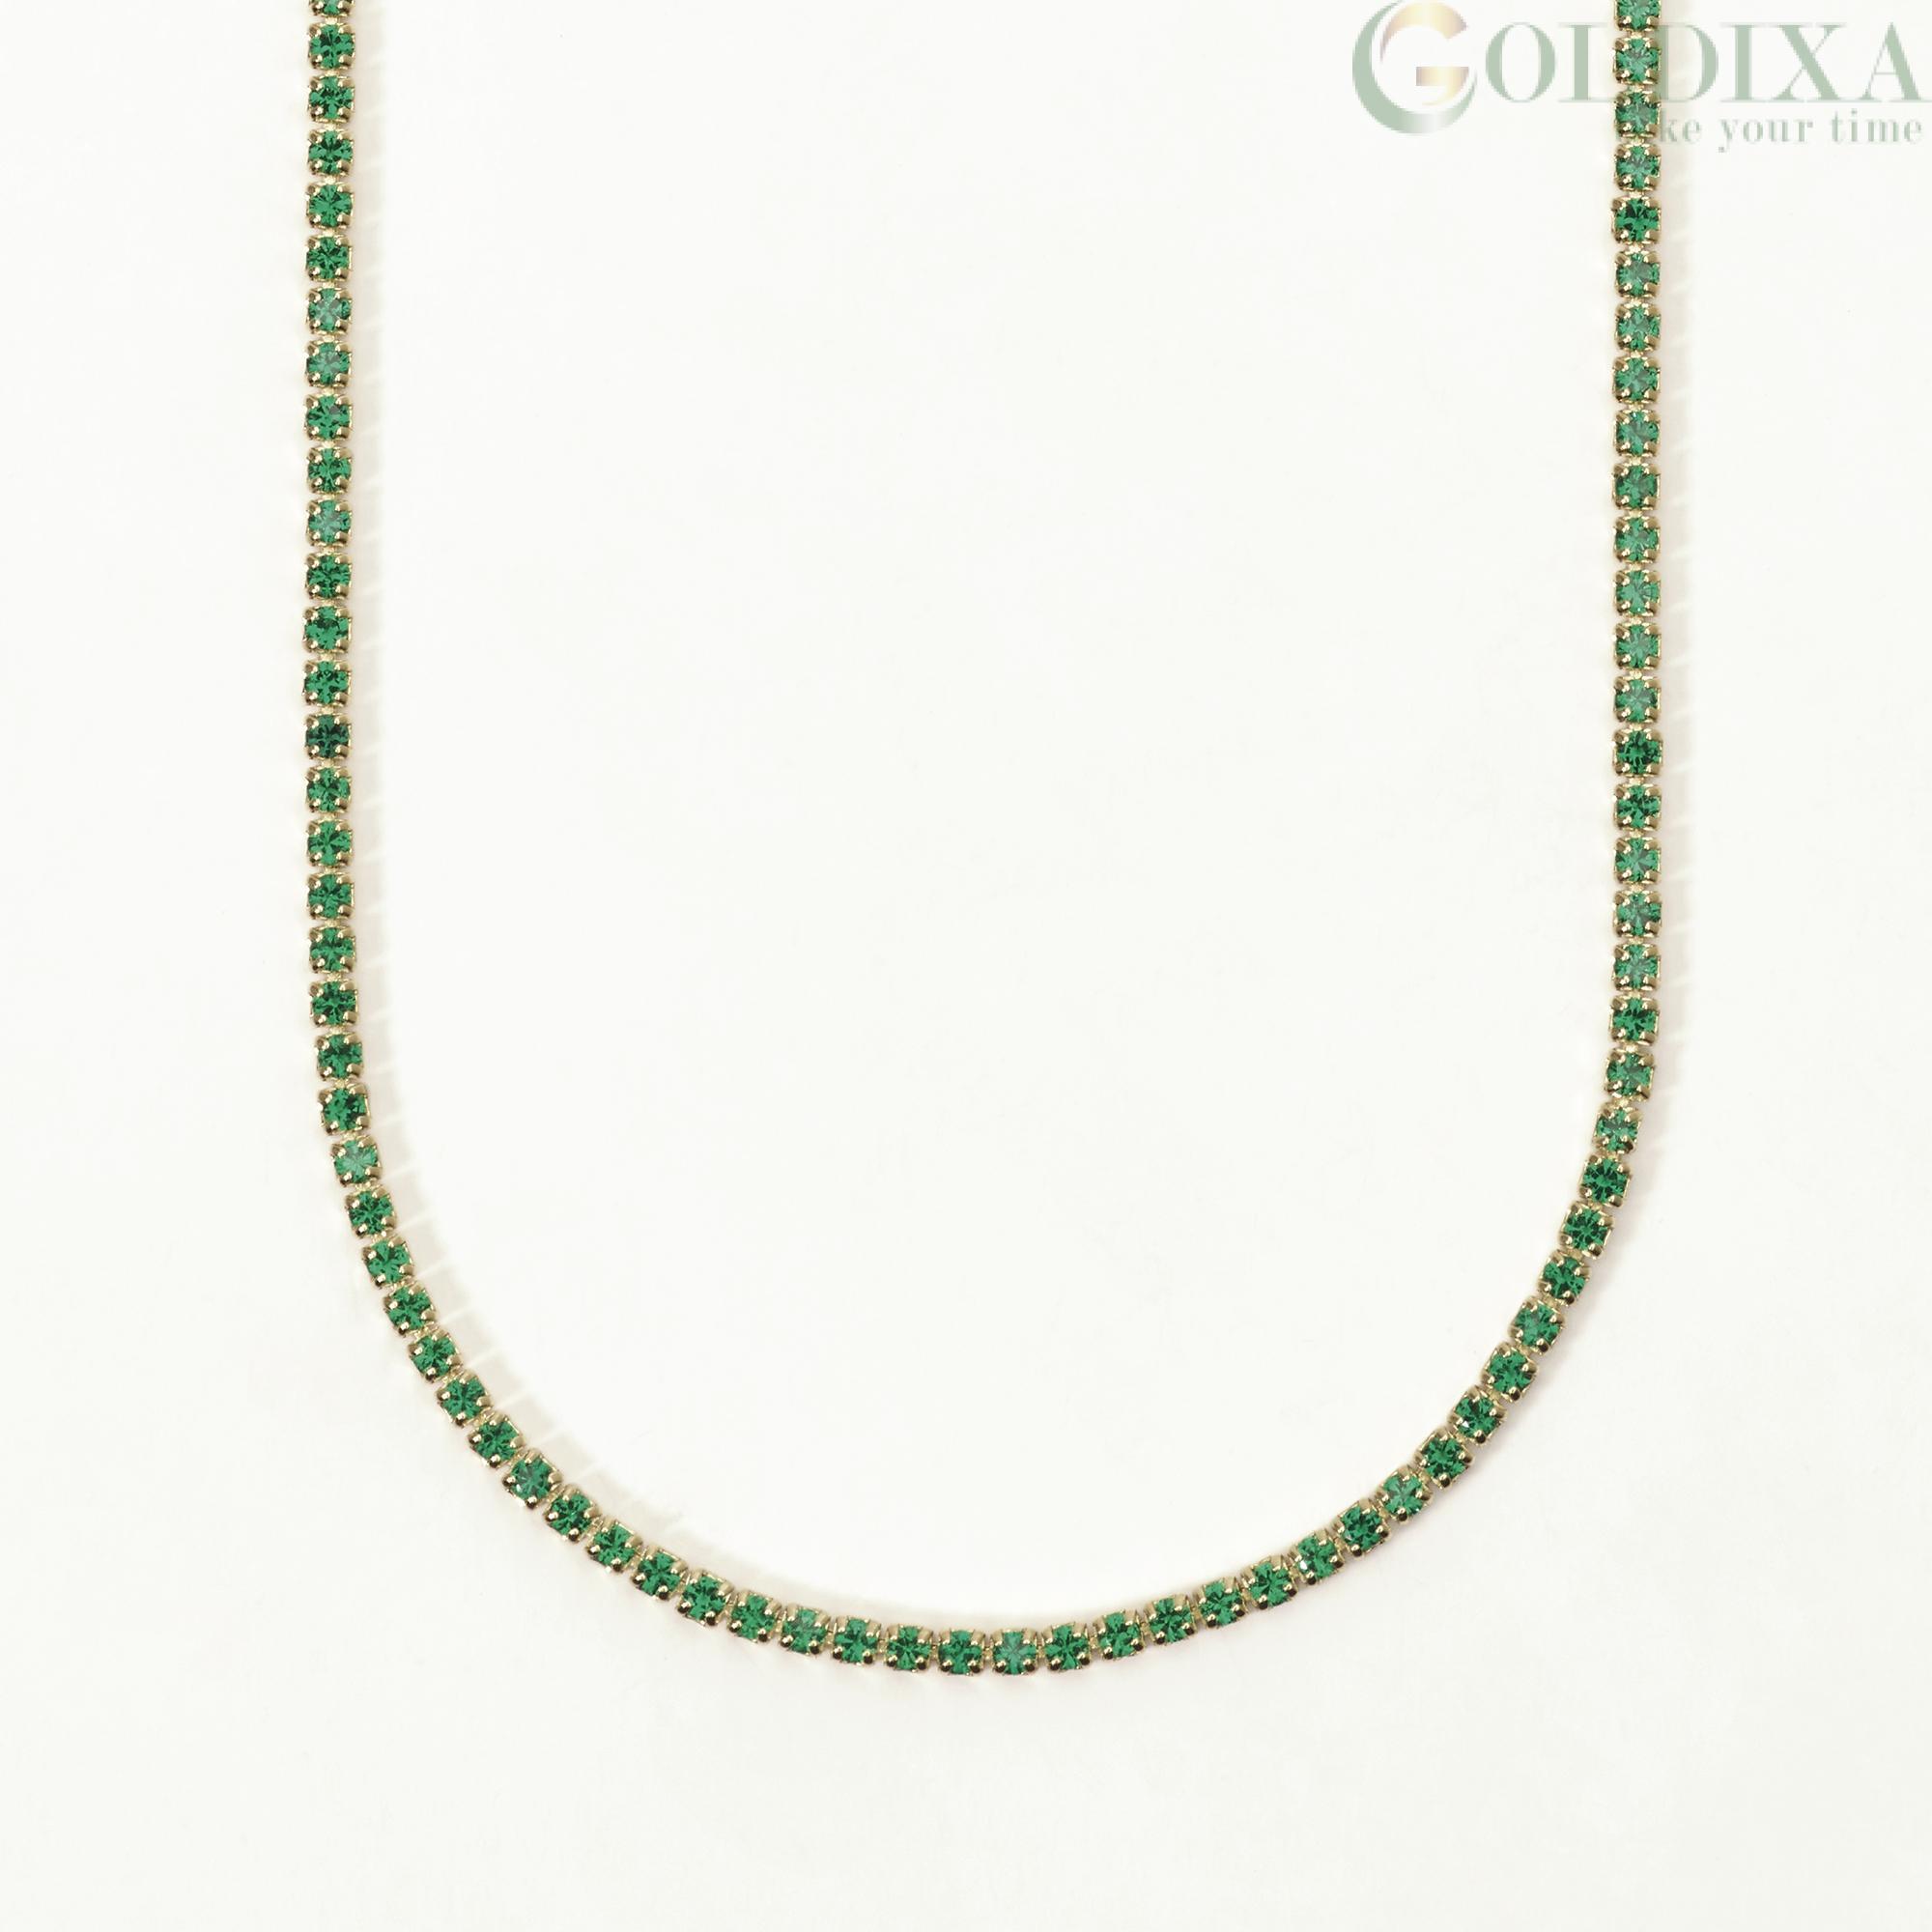 Garbo Oval Gemstone Tennis Necklace Paraiba Tourmaline Gold | Womens  jewelry necklace, Tennis necklace, Gemstones